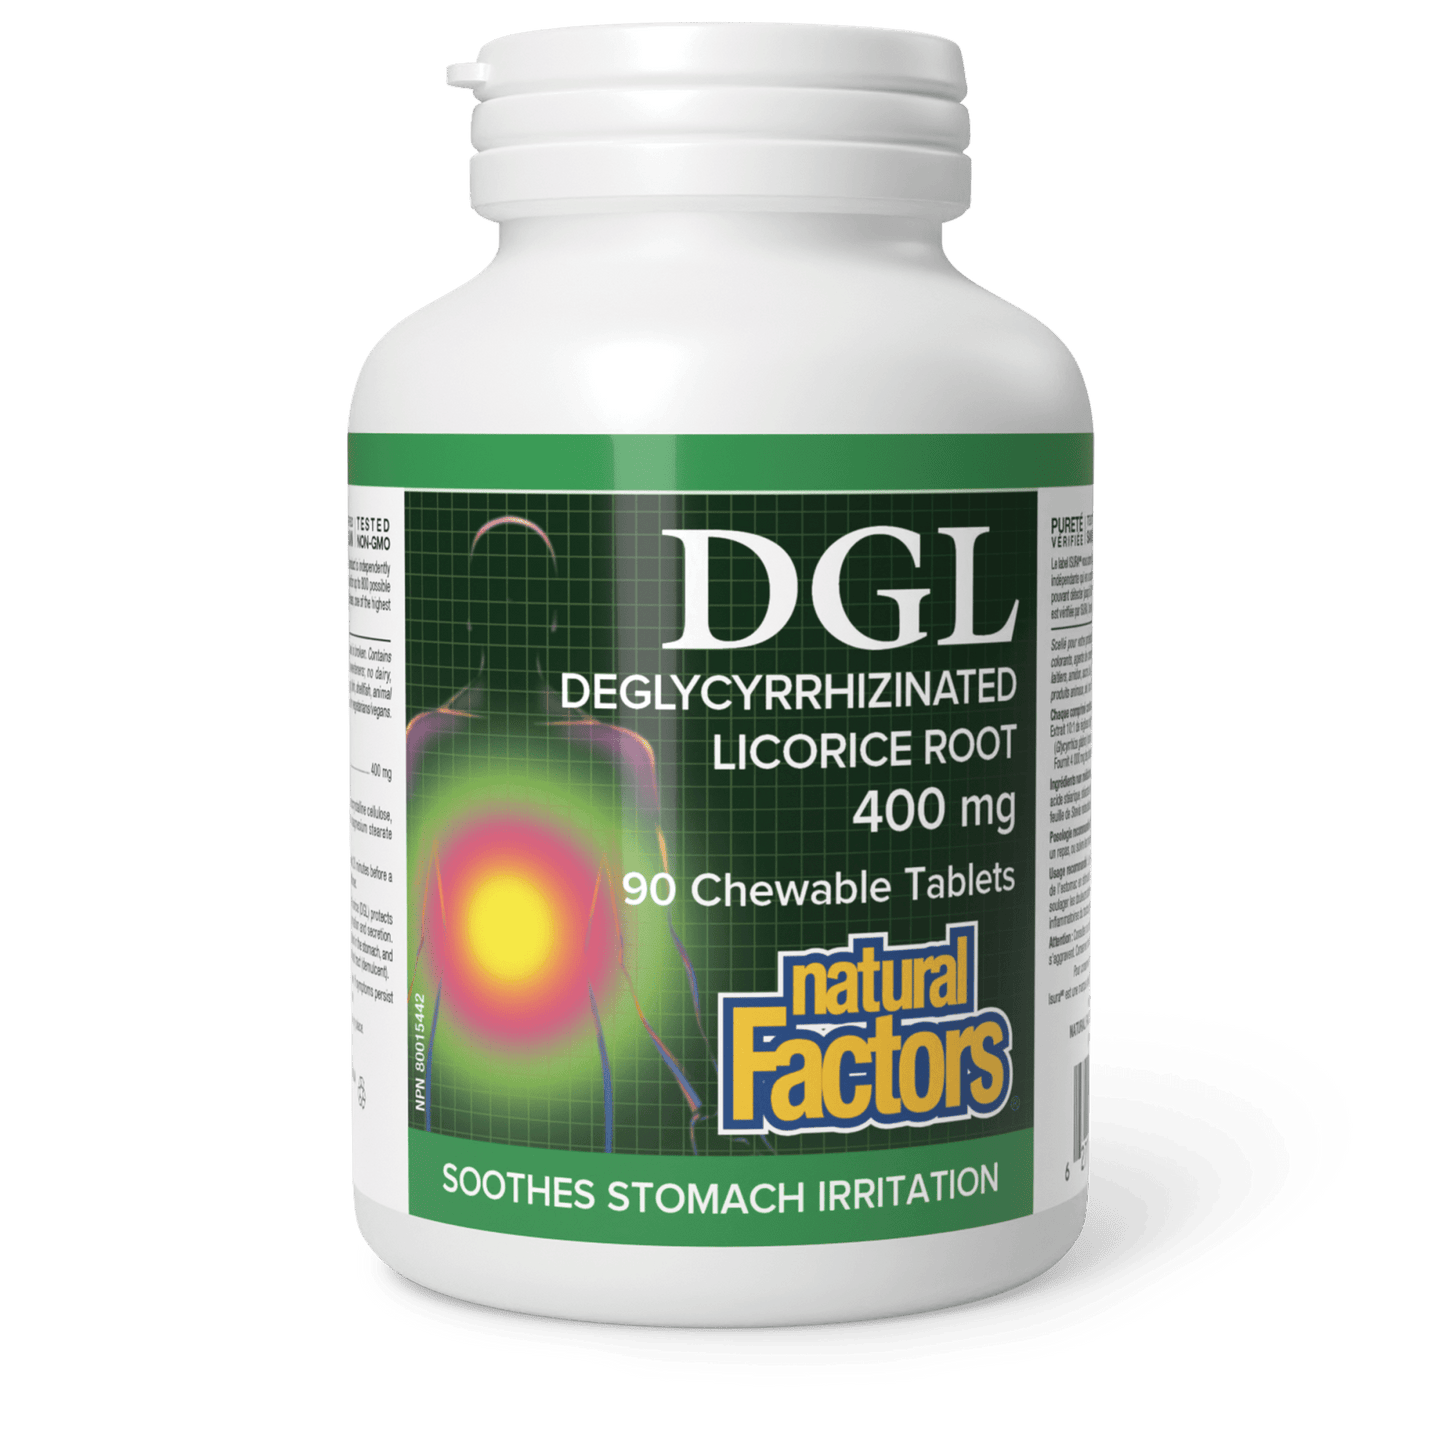 DGL Deglycyrrhizinated Licorice Root 400 mg, Natural Factors|v|image|4508